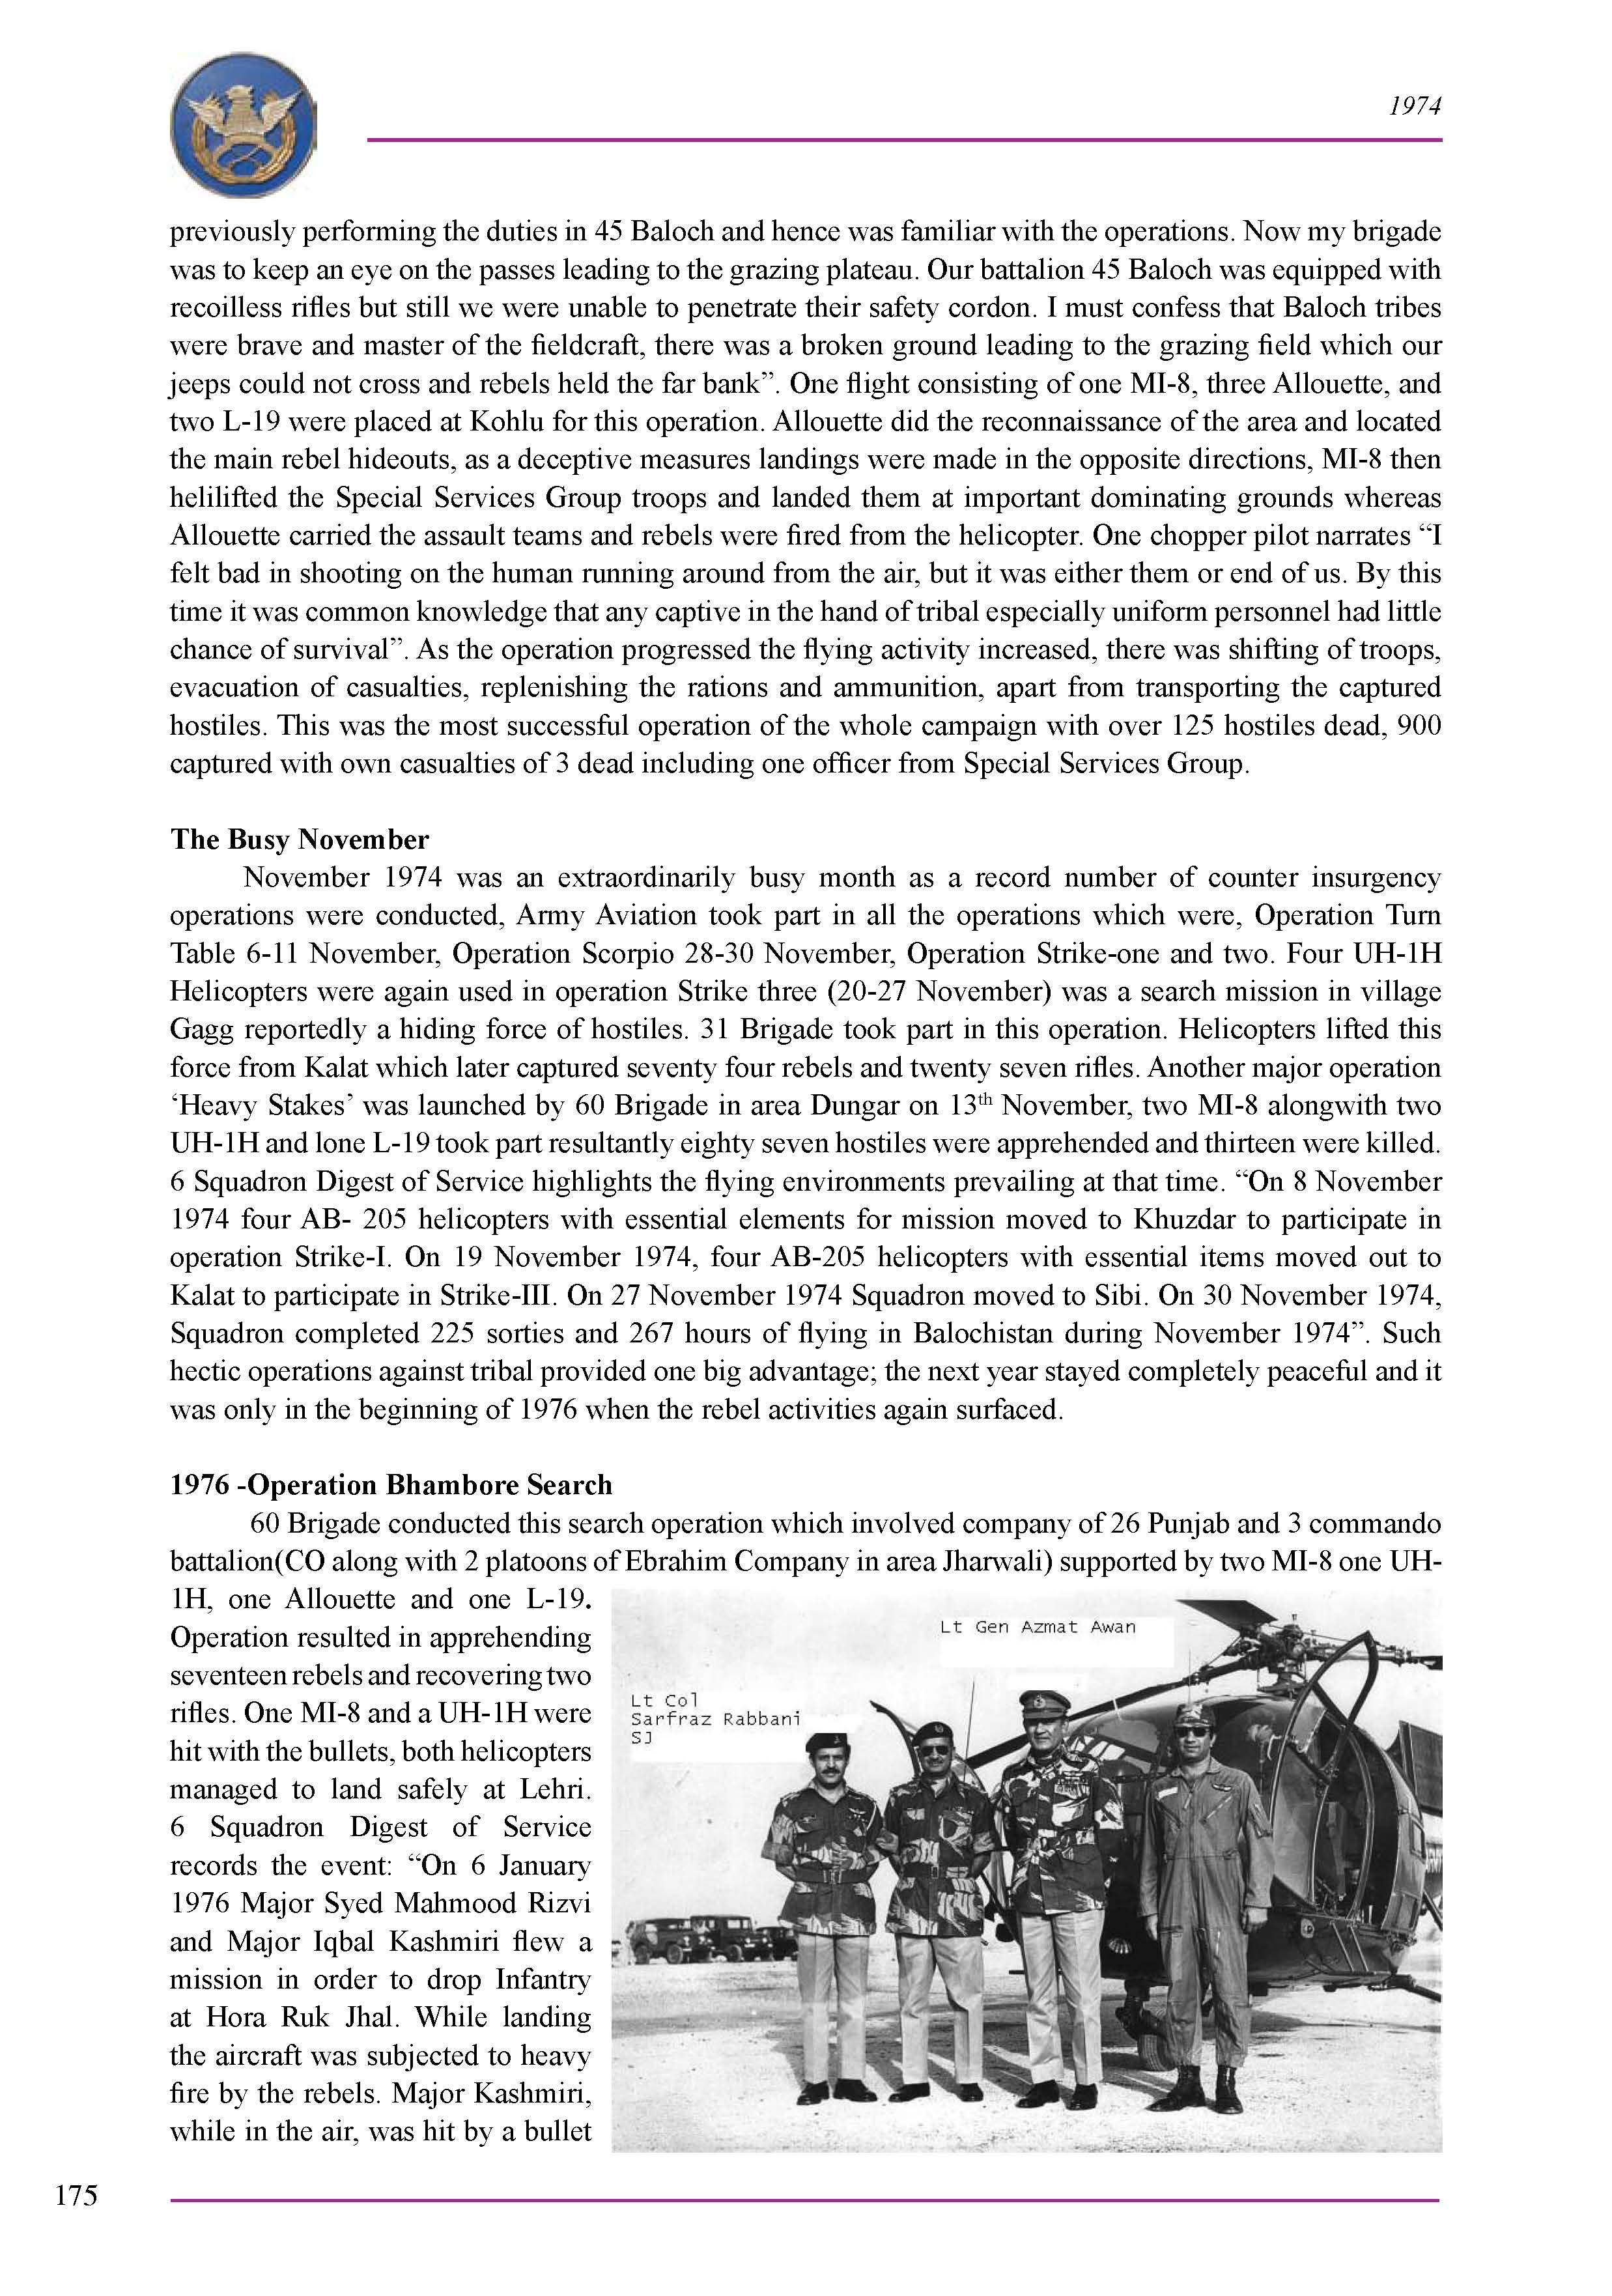 AVIATION HISTORY_Page_184.jpg